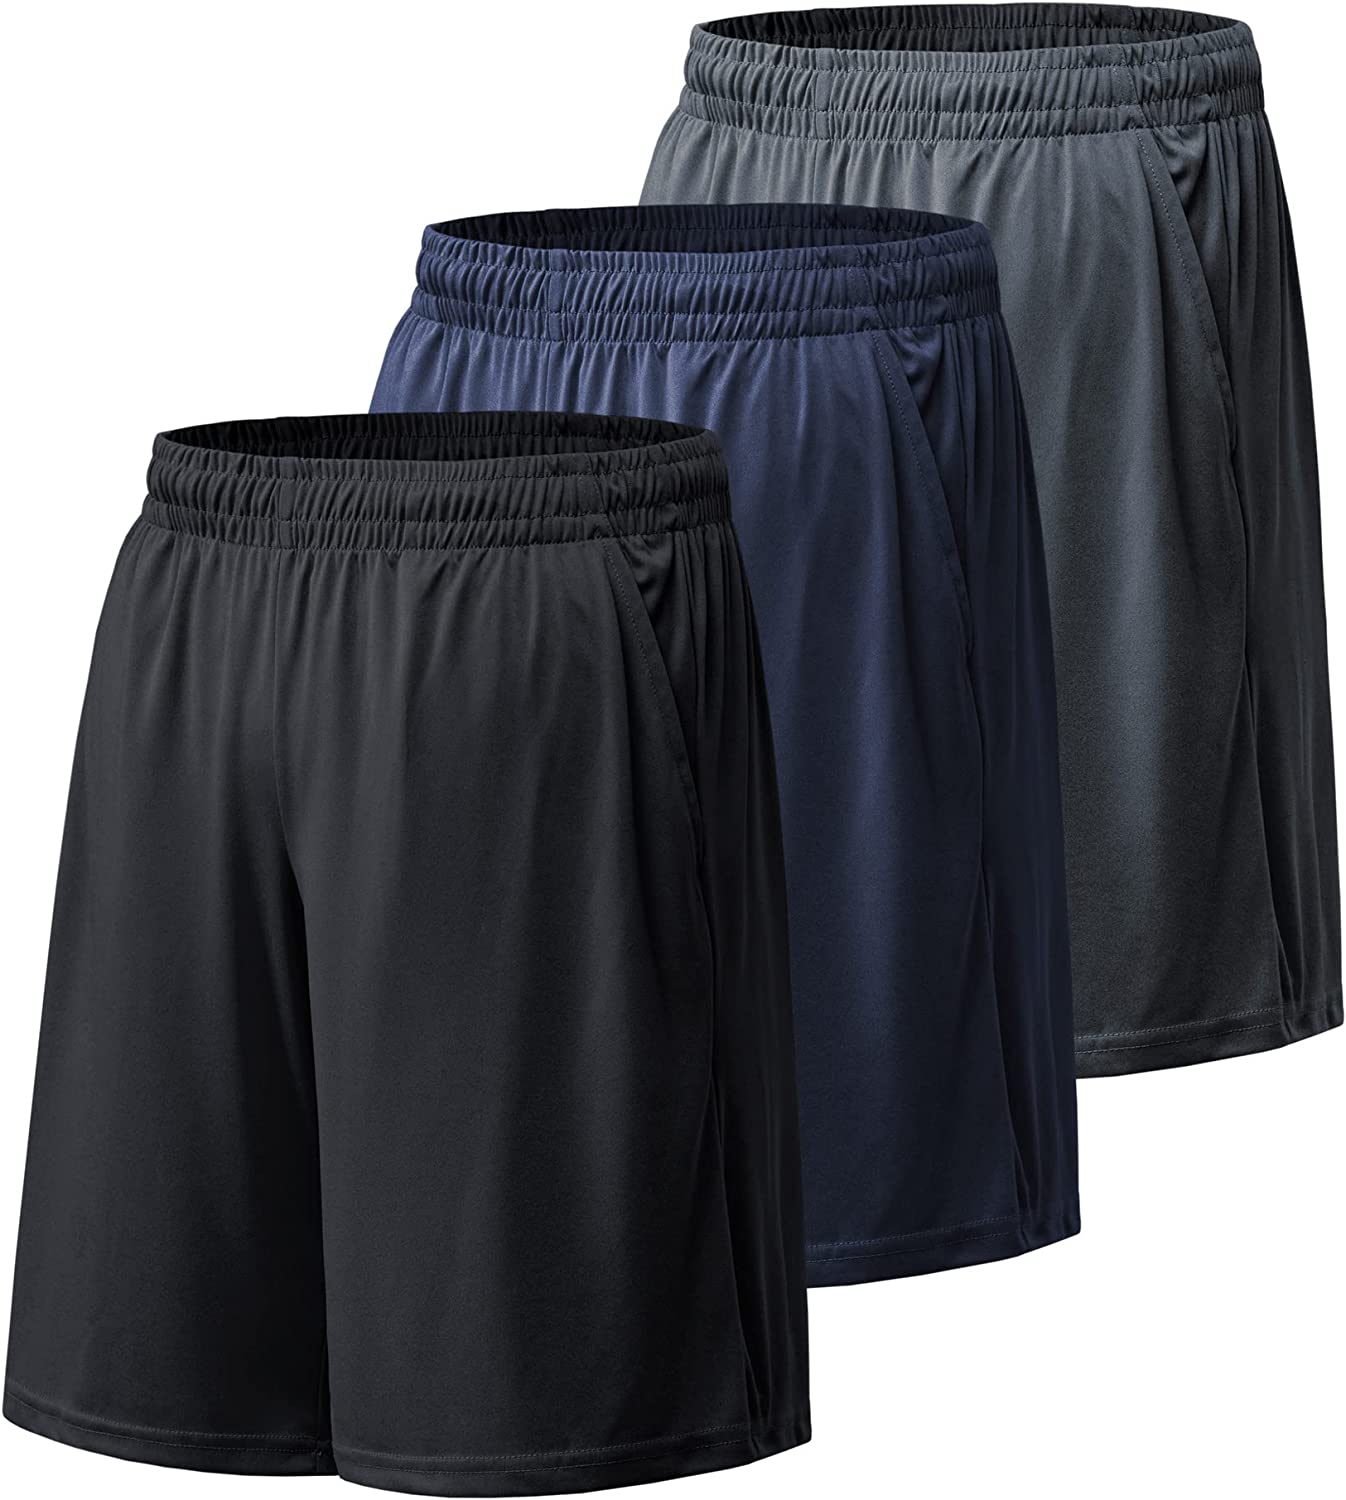 Men's Athletic Shorts, Basketball Shorts & Running Shorts